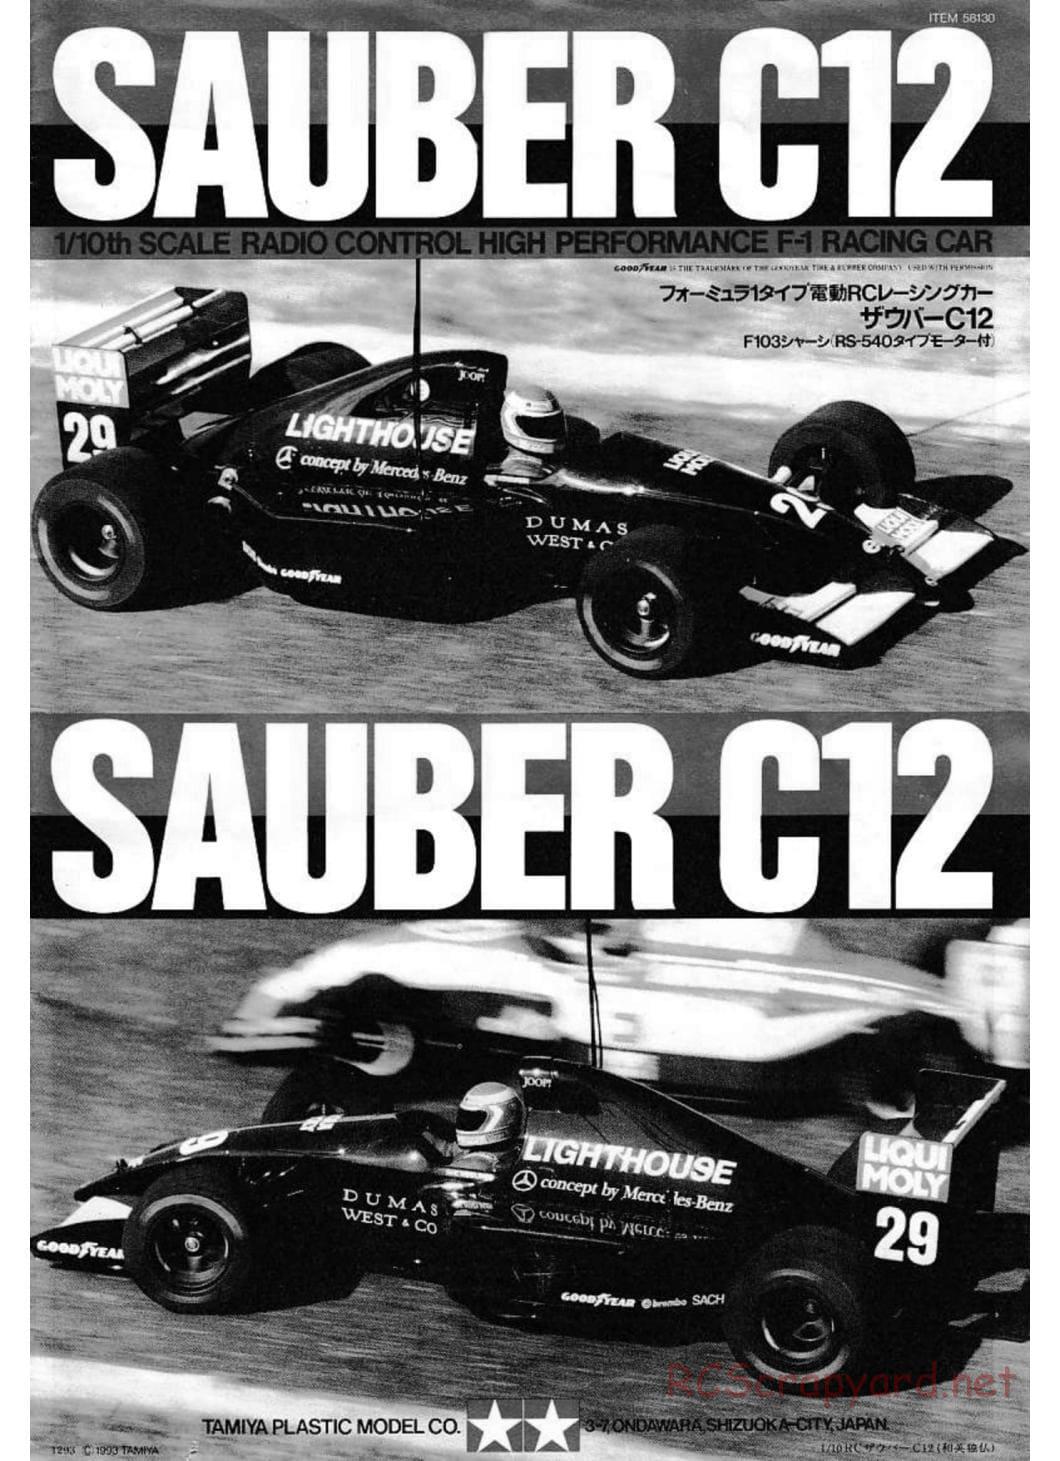 Tamiya - Sauber C12 - F103 Chassis - Manual - Page 1